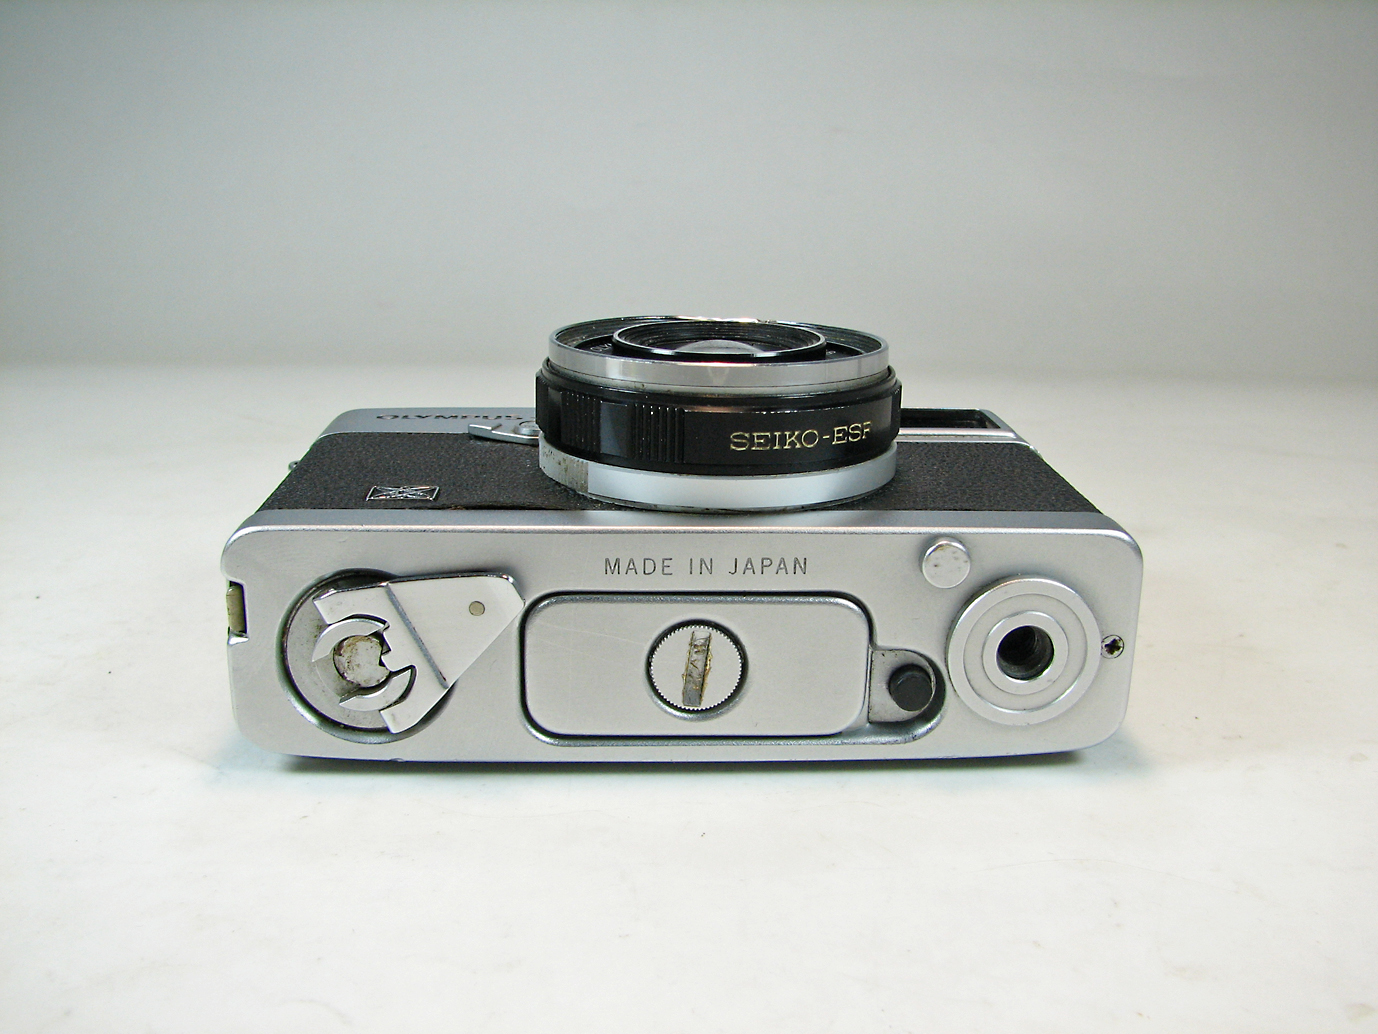 دوربین کلکسیونی Olympus - 35 ec 2